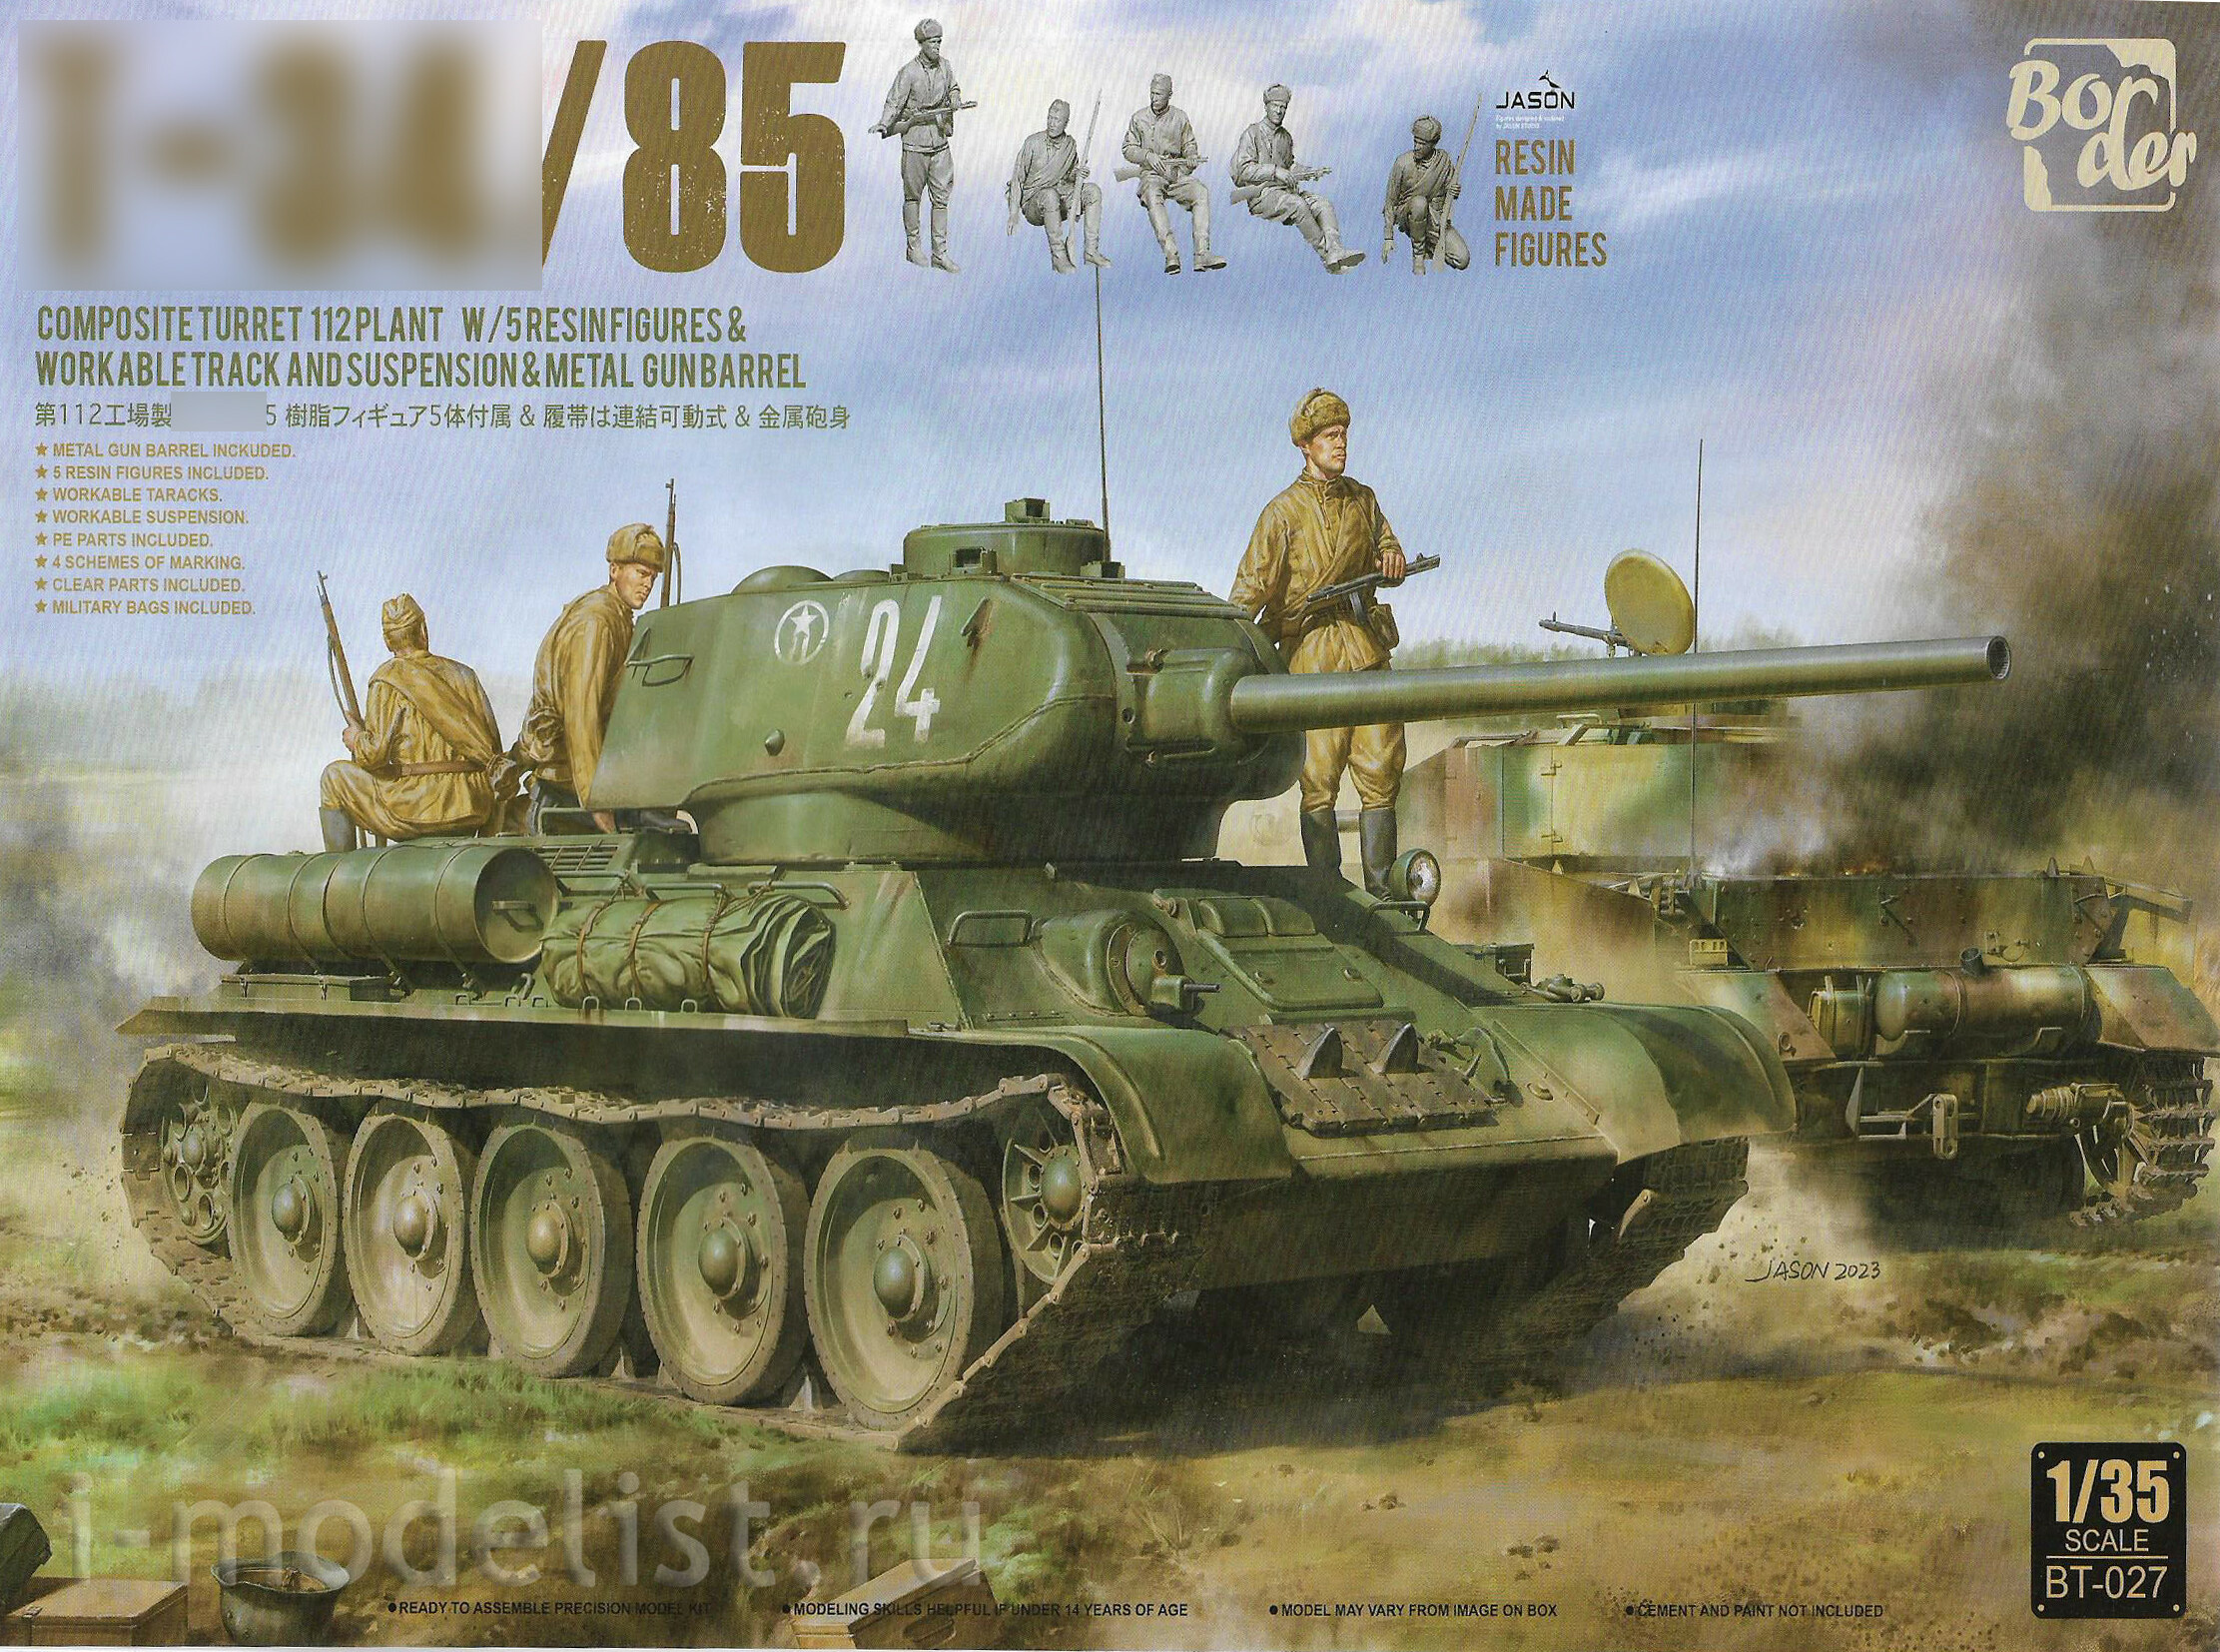 BT-027 Border Model 1/35 Soviet Medium Tank Type 34, Composite Turret, 112 Plant